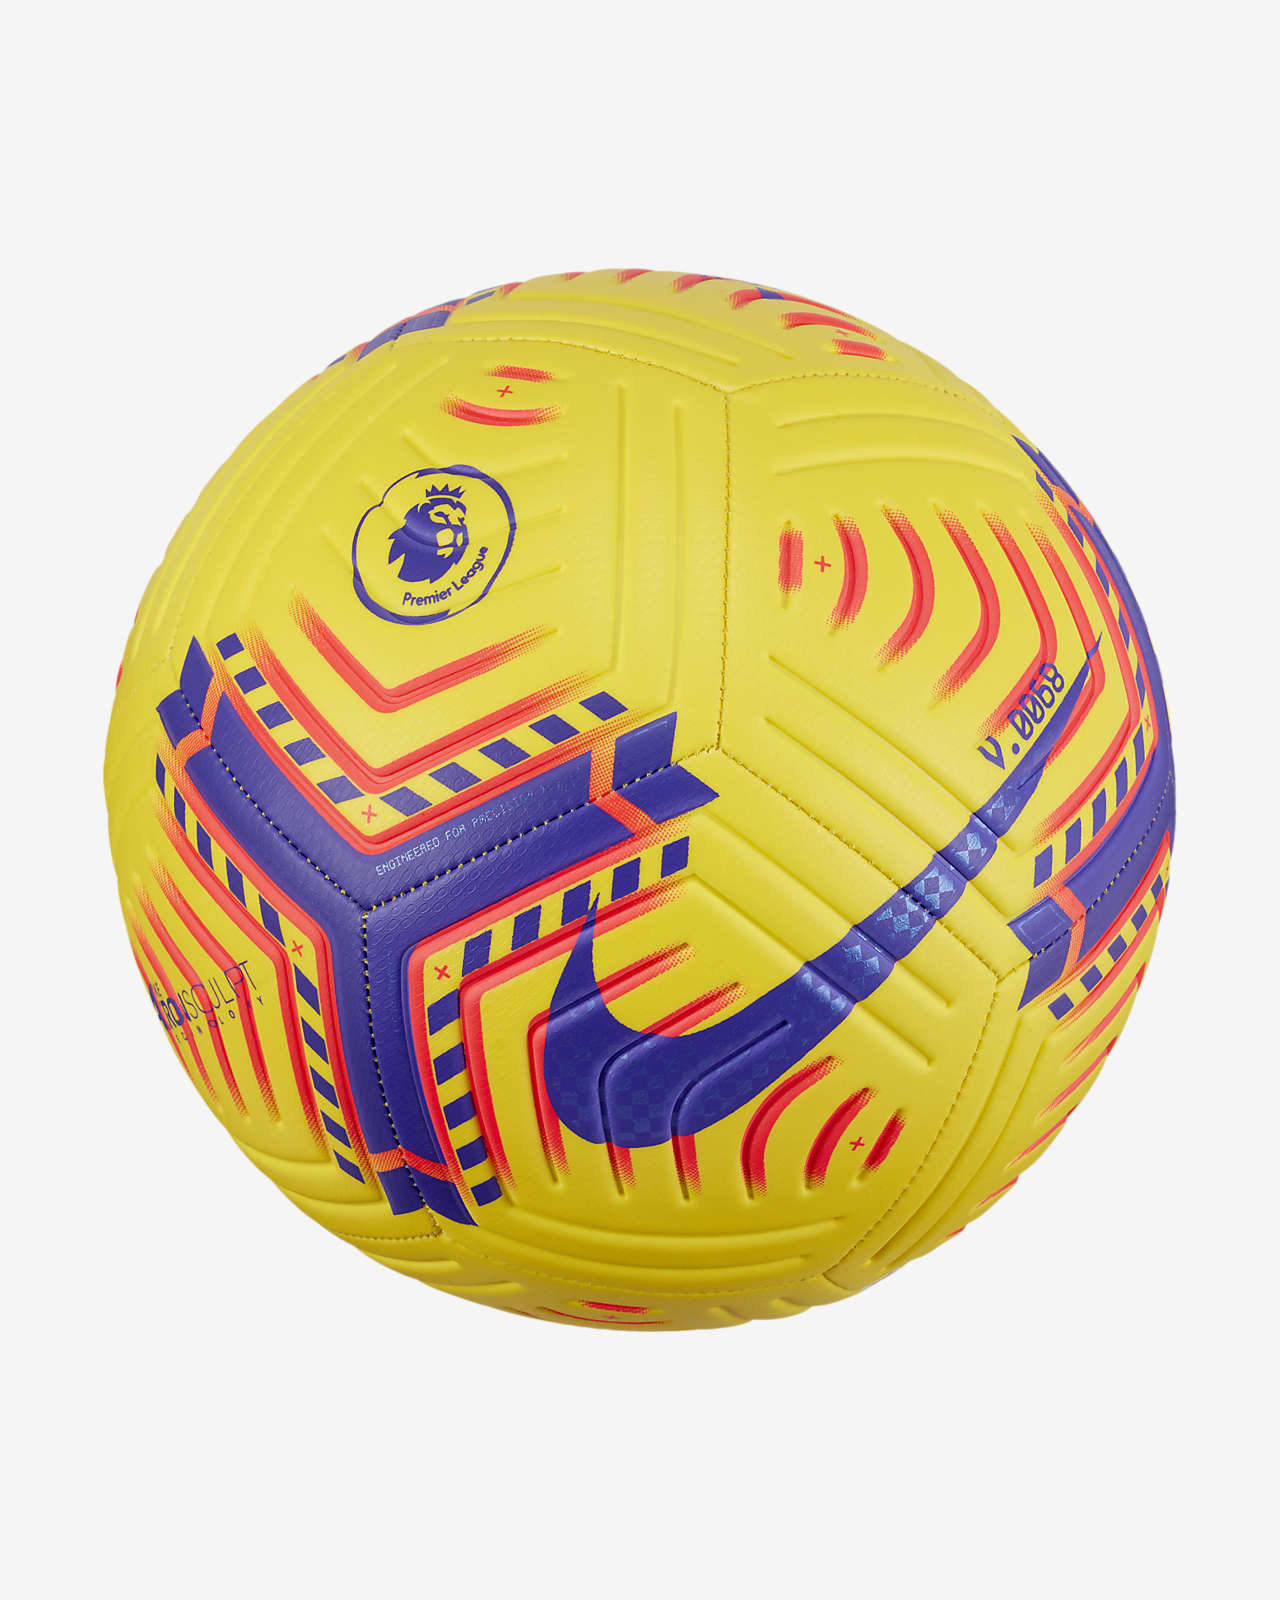 balon de futbol premier league